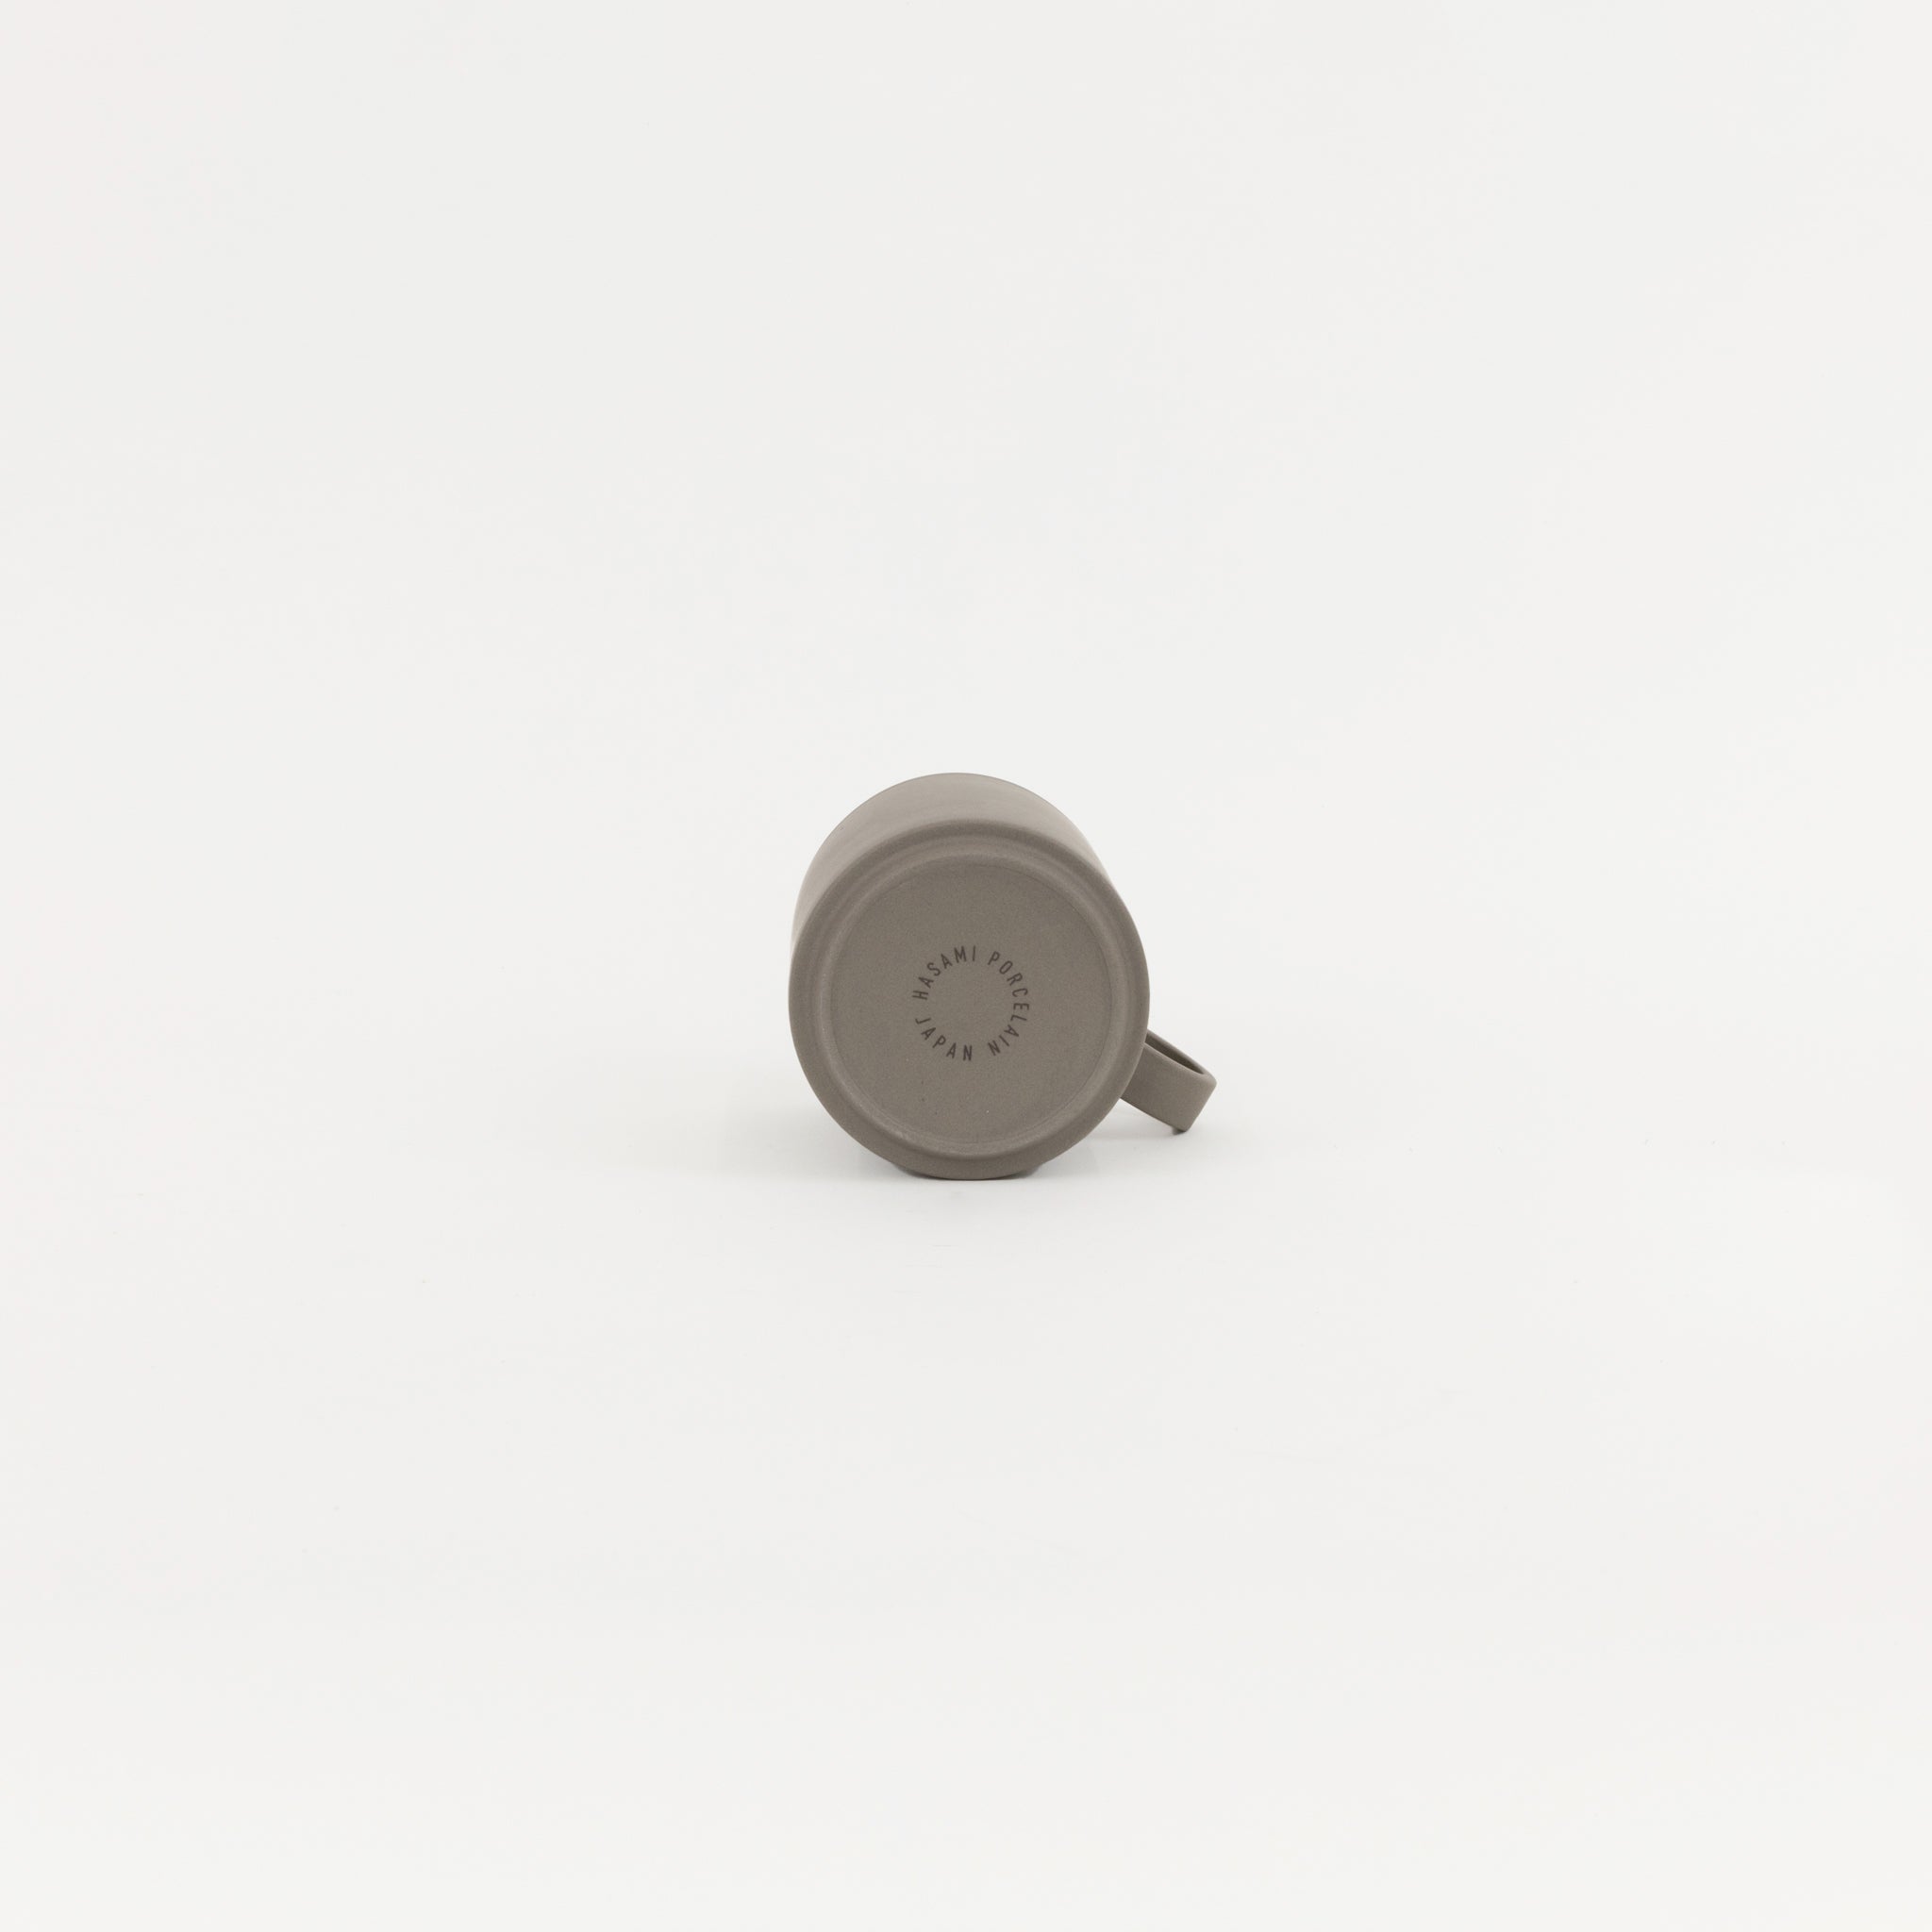 HDG119 - Mug Dark Gray Small ø 3.3/8" | Tortoise General Store